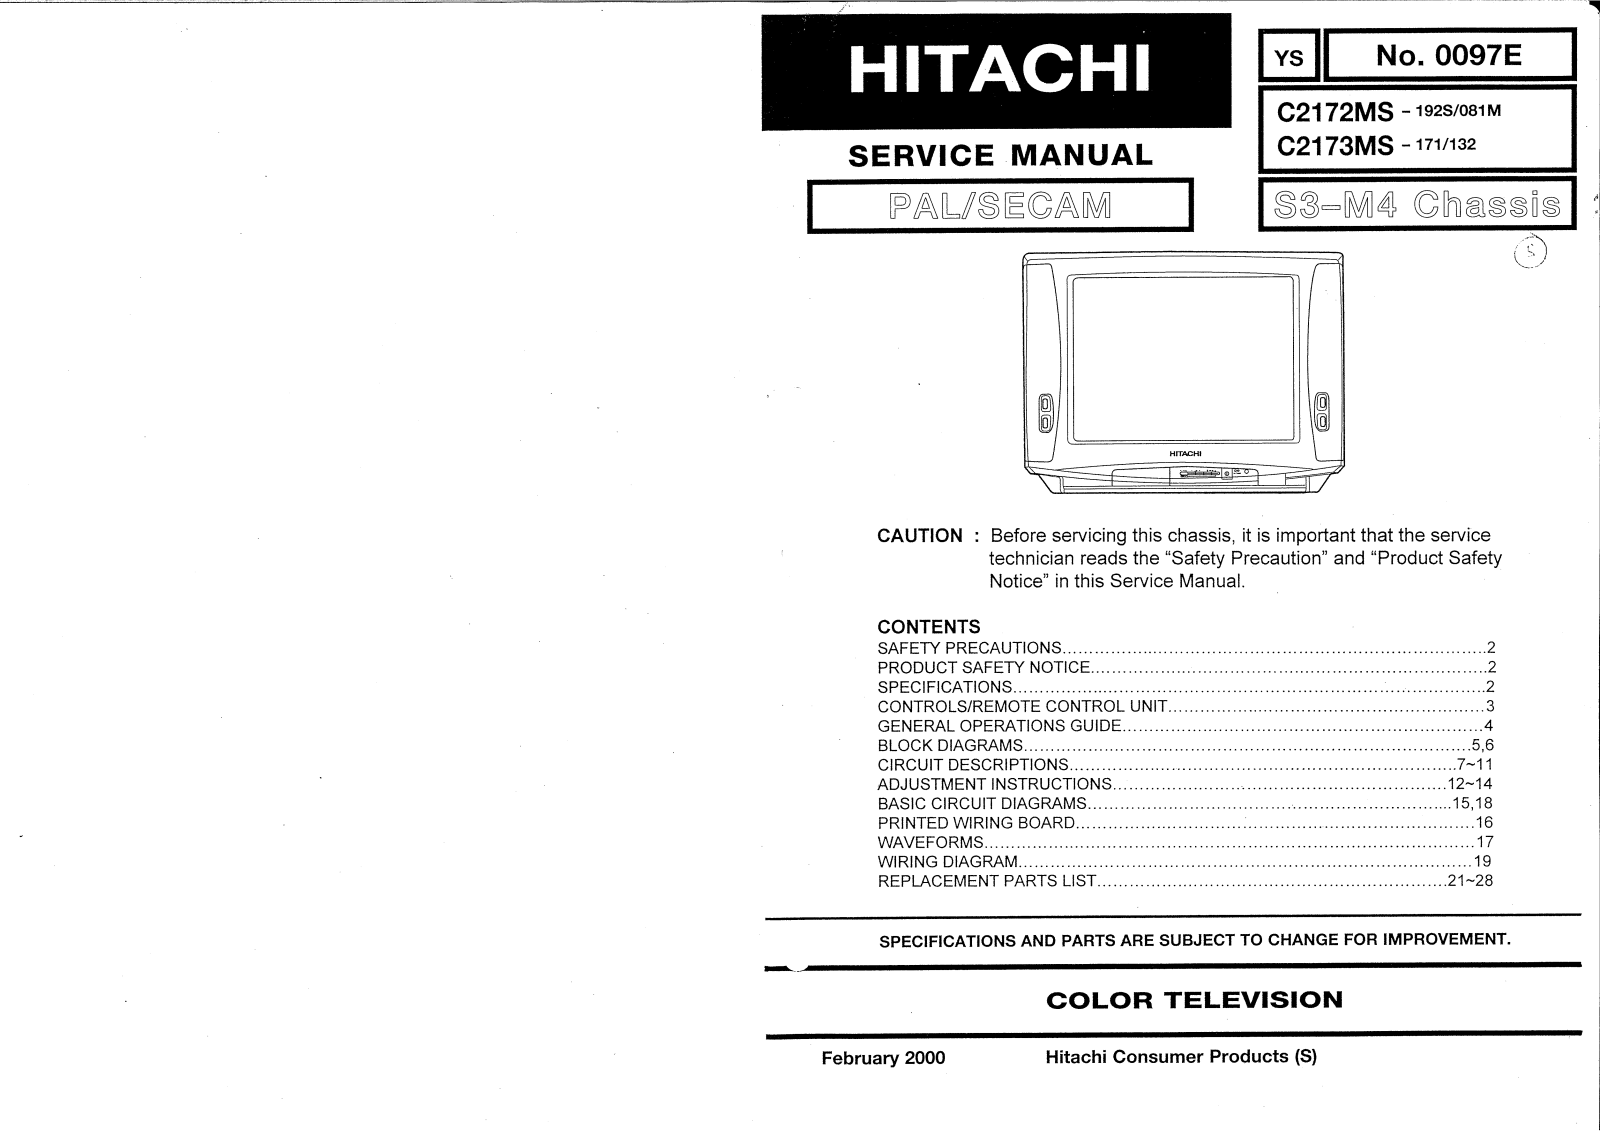 Hitachi C2172, C73 Service Manual